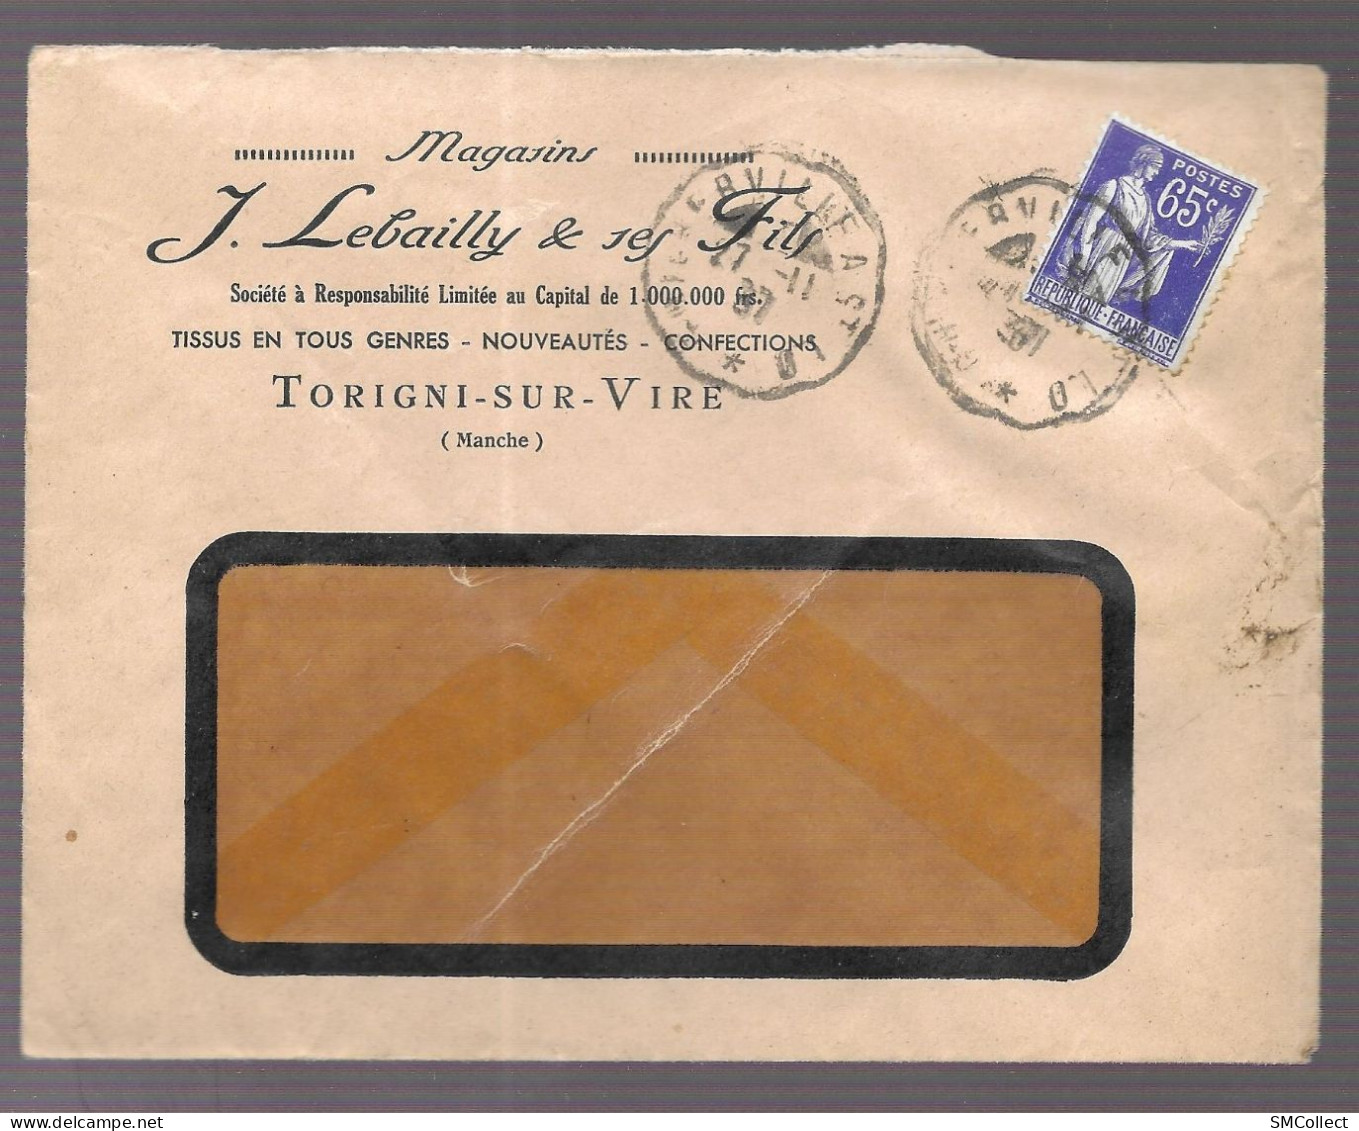 Torigni Sur Vire 1937. Enveloppe à En-tête J. Lebailly & Ses Fils - 1921-1960: Modern Period